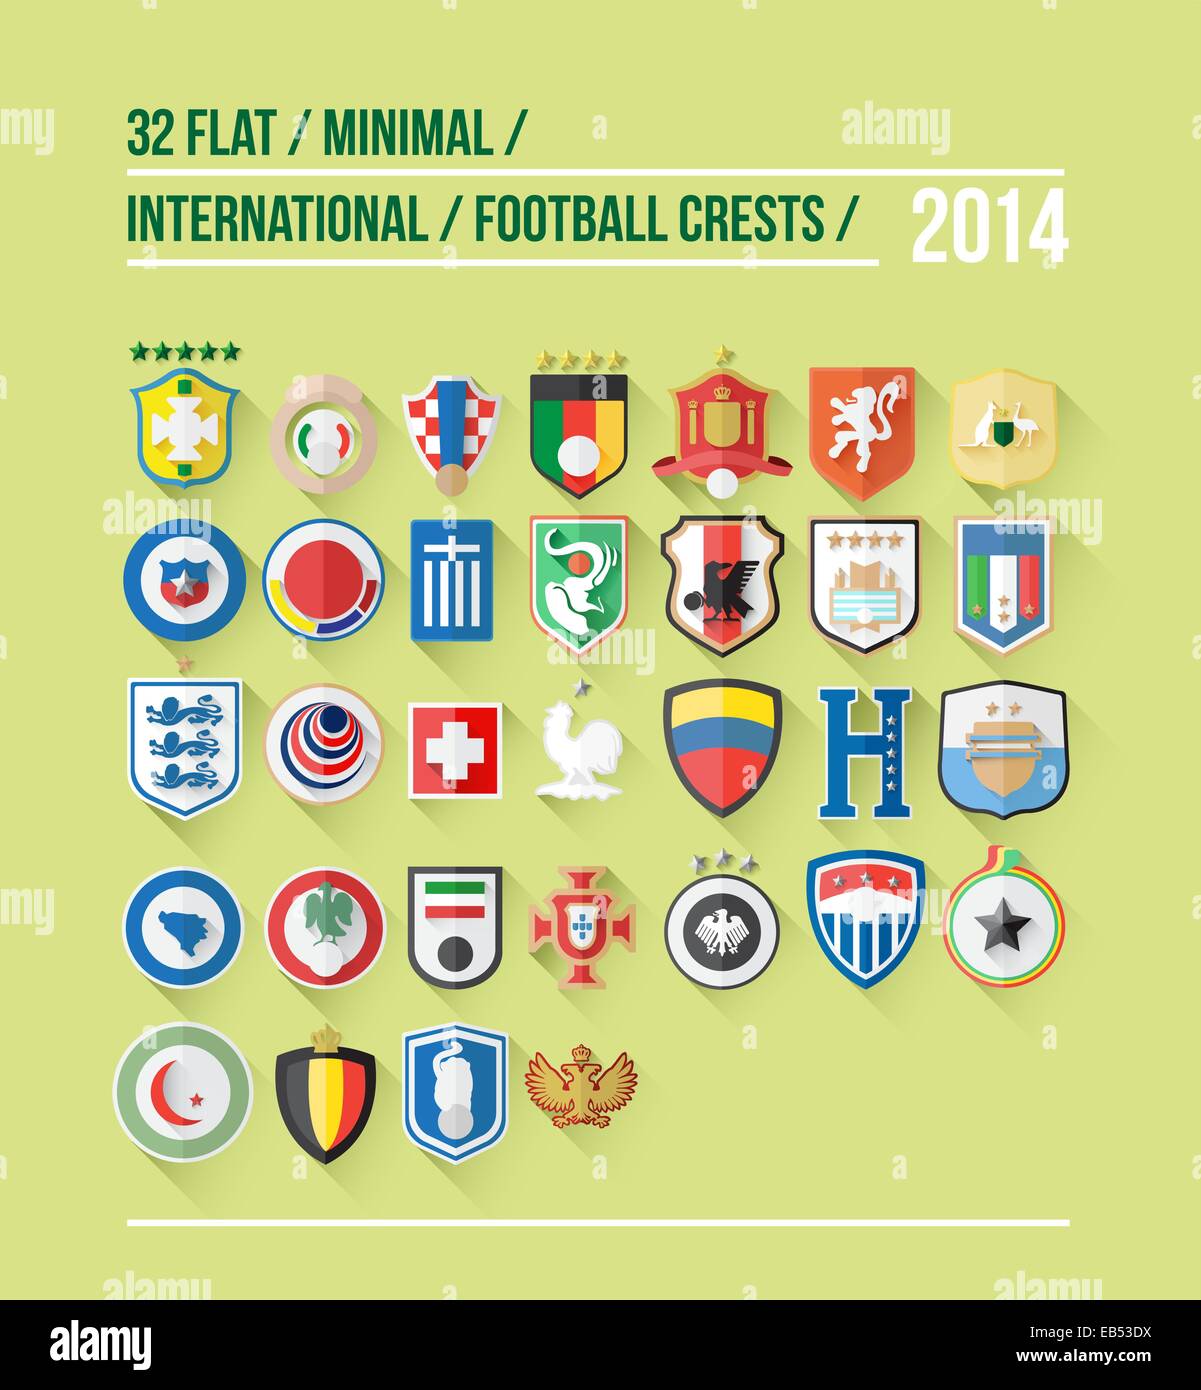 International football crest vector for 2014 Stock Vector